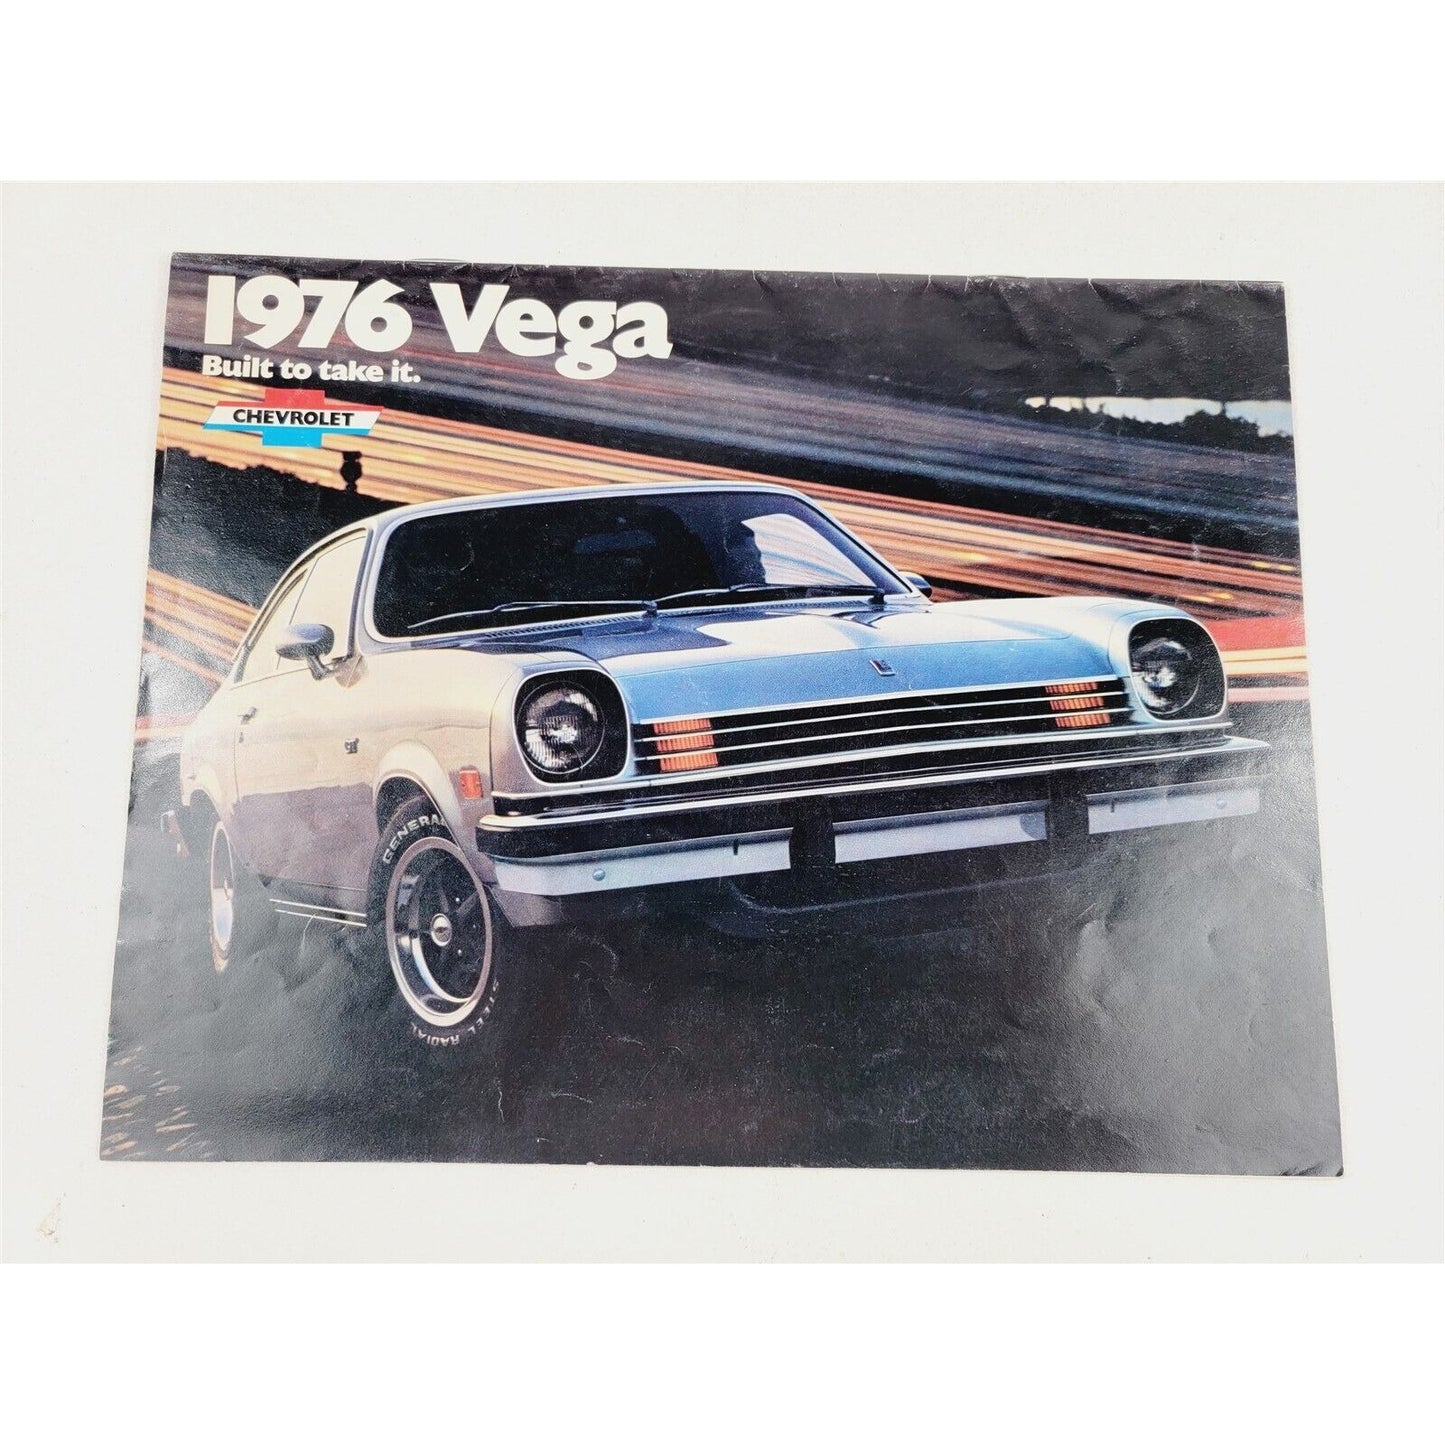 5 Vintage Car Dealership 70s Brochures Ford Fiesta Dasher Vega Corolla Chevrolet